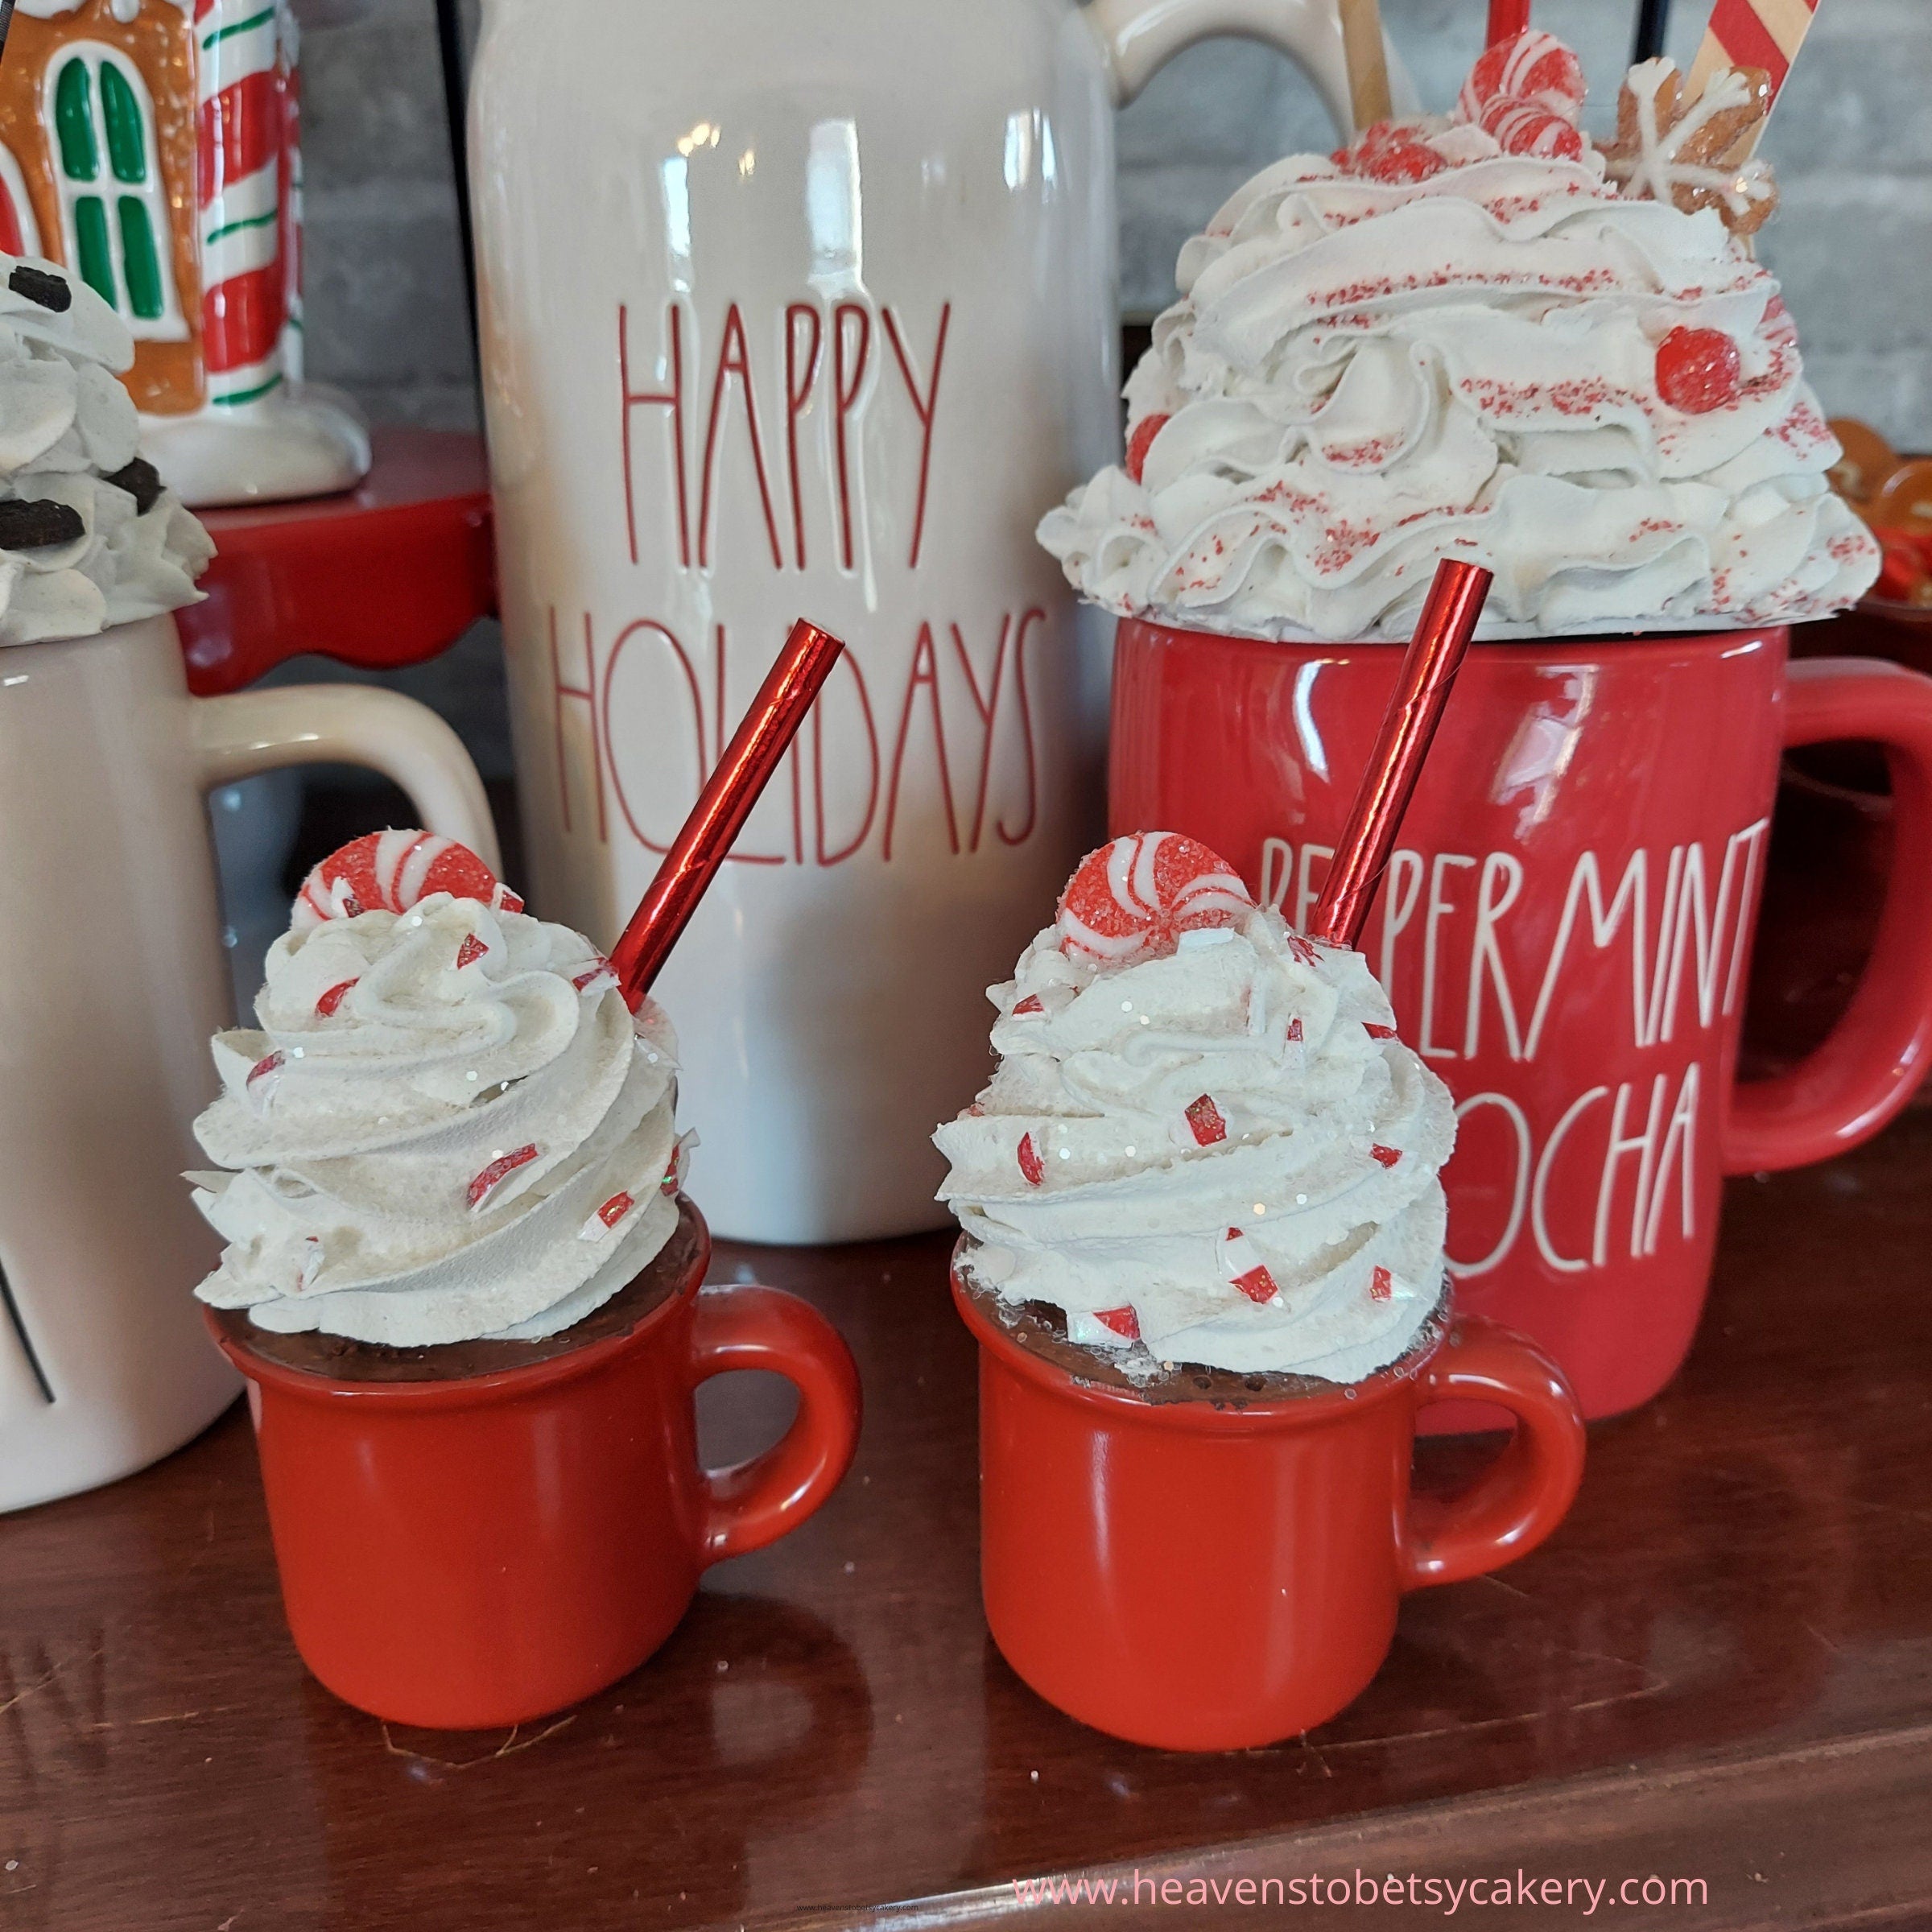 CHRISTMAS CANDY CANES & PEPPERMINTS' mug - 5 dollar mugs (5dms) ($5 mugs)